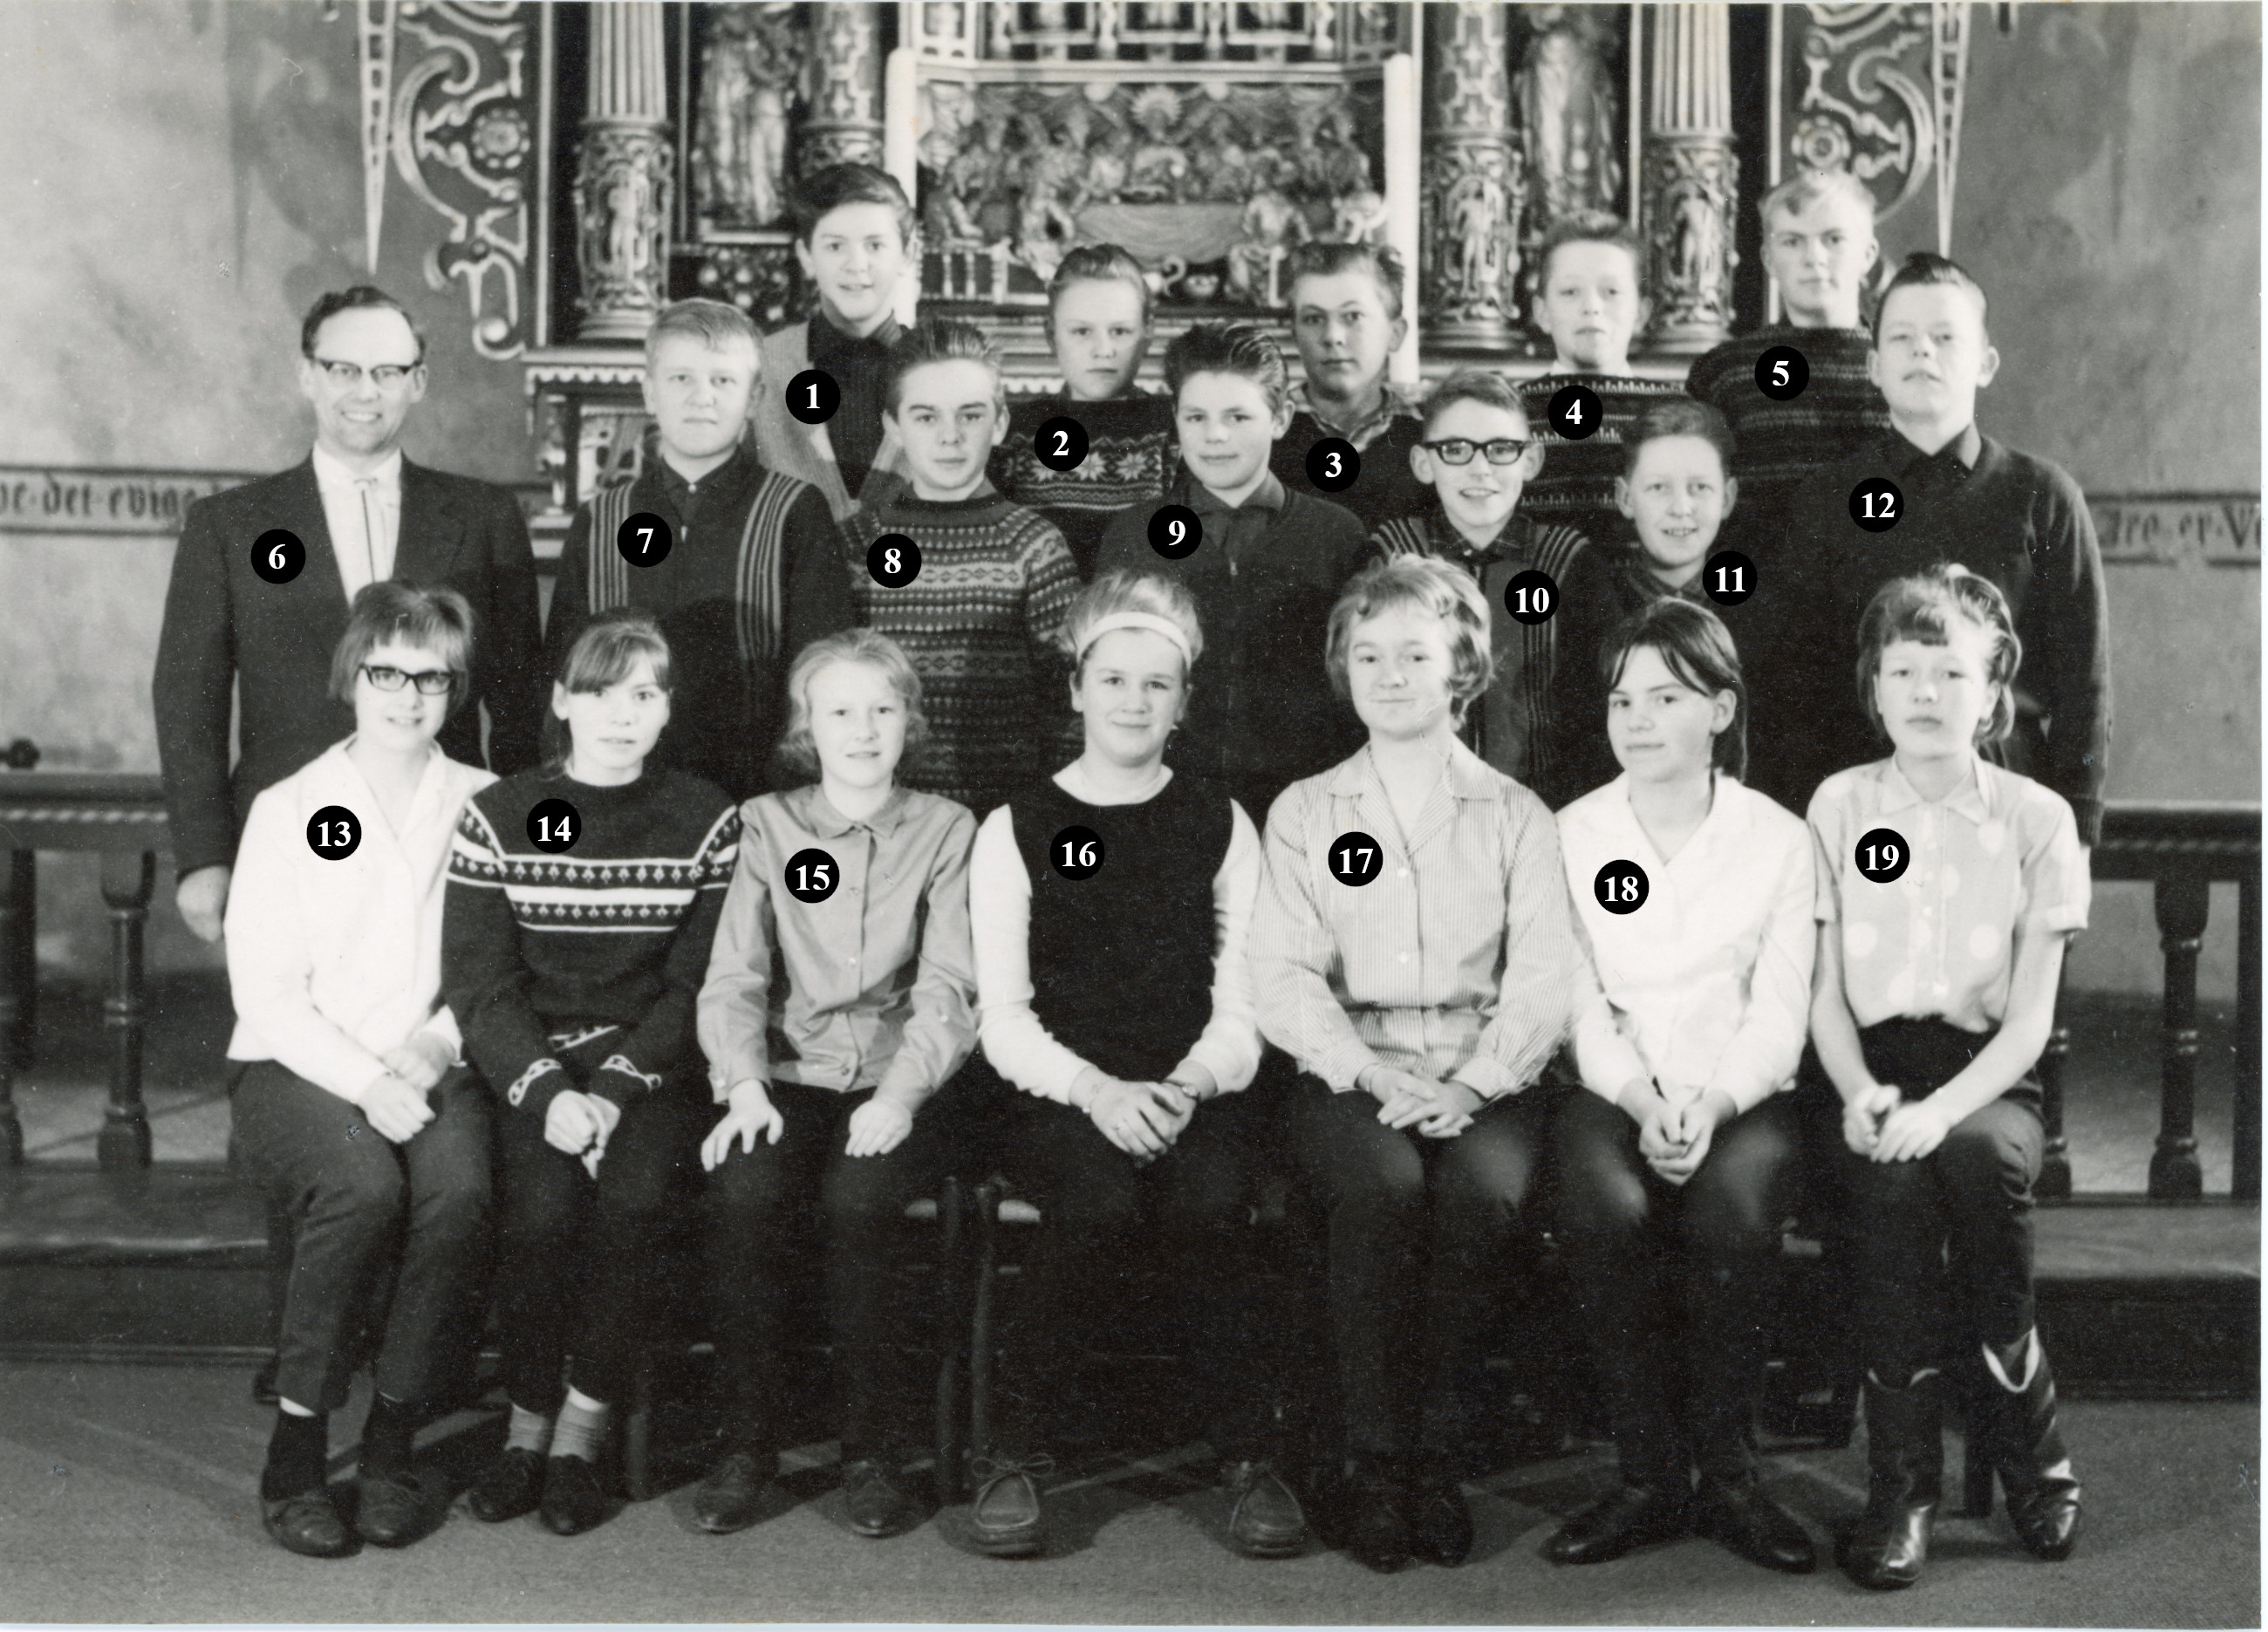 Bente Nielsens konfirmation i Glesborg kirke - 1964